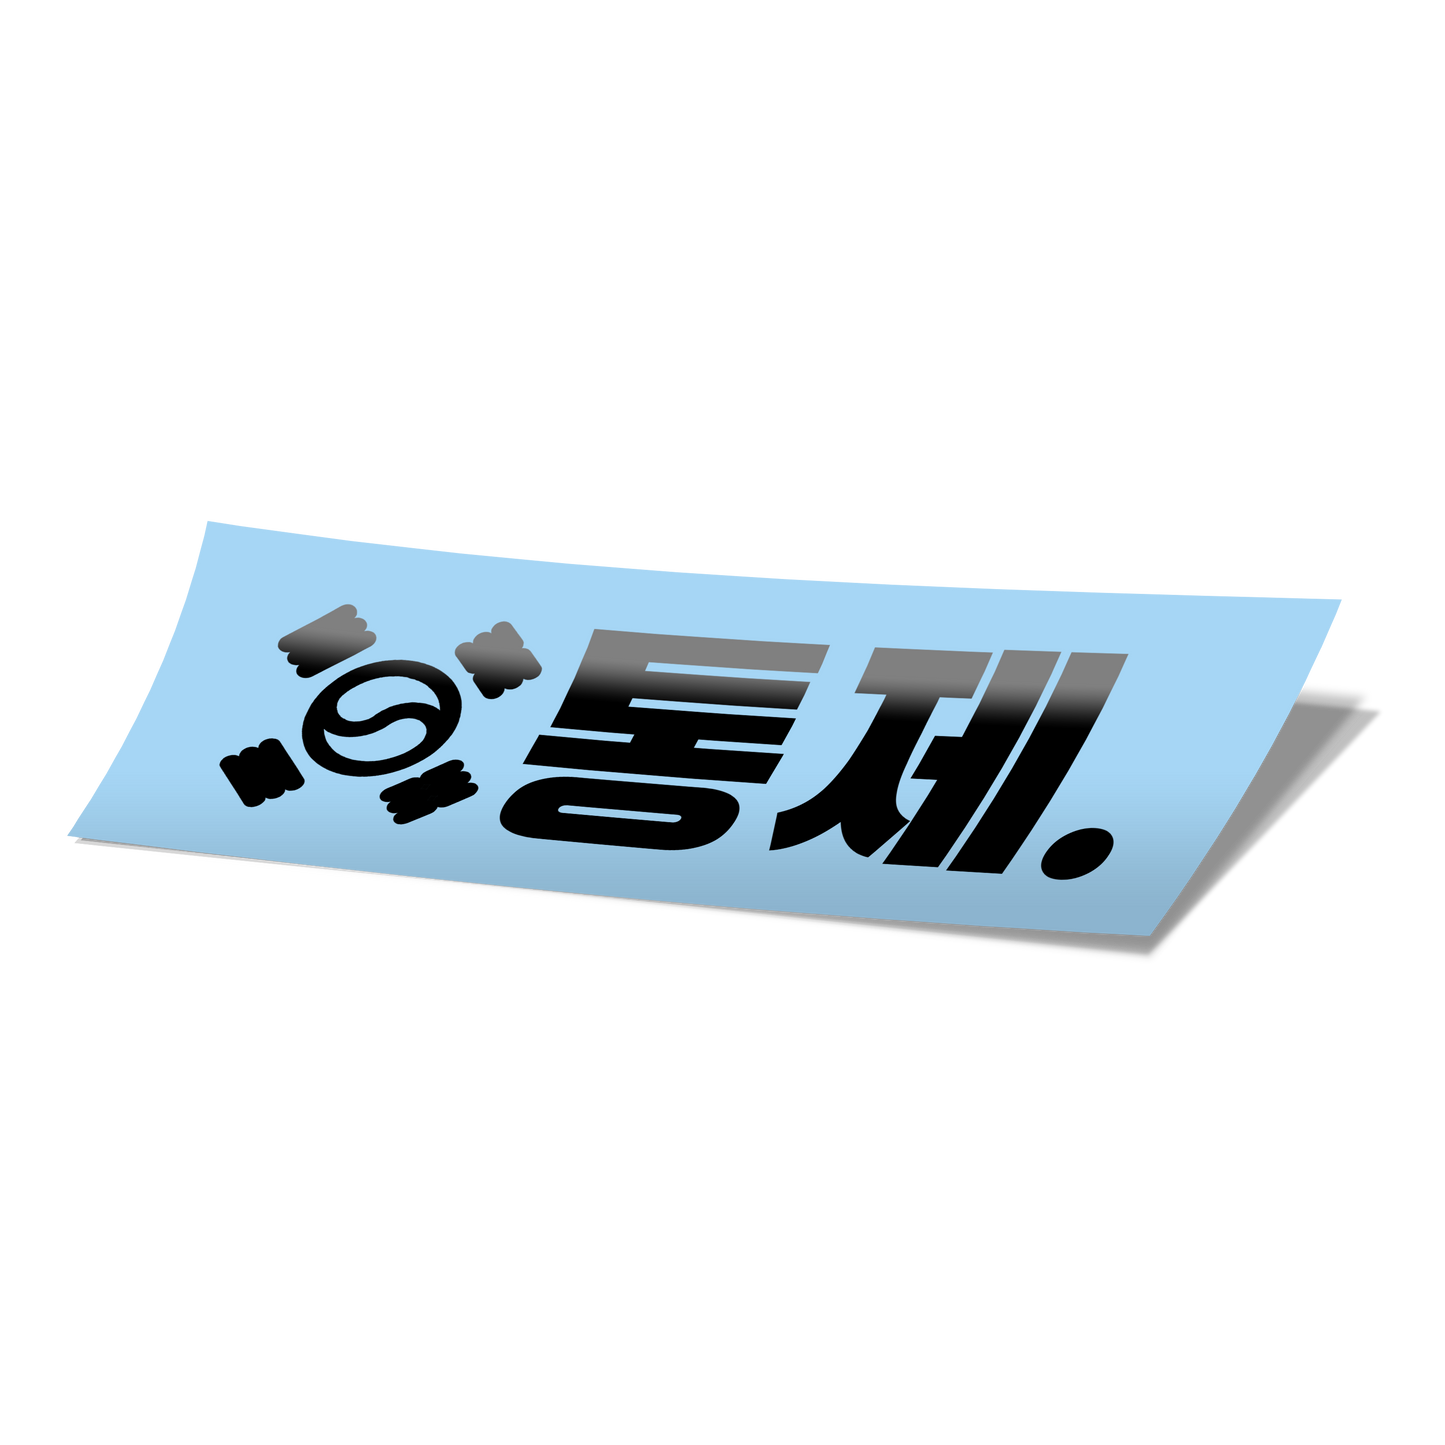 5" Contrl. Korean Slap Sticker